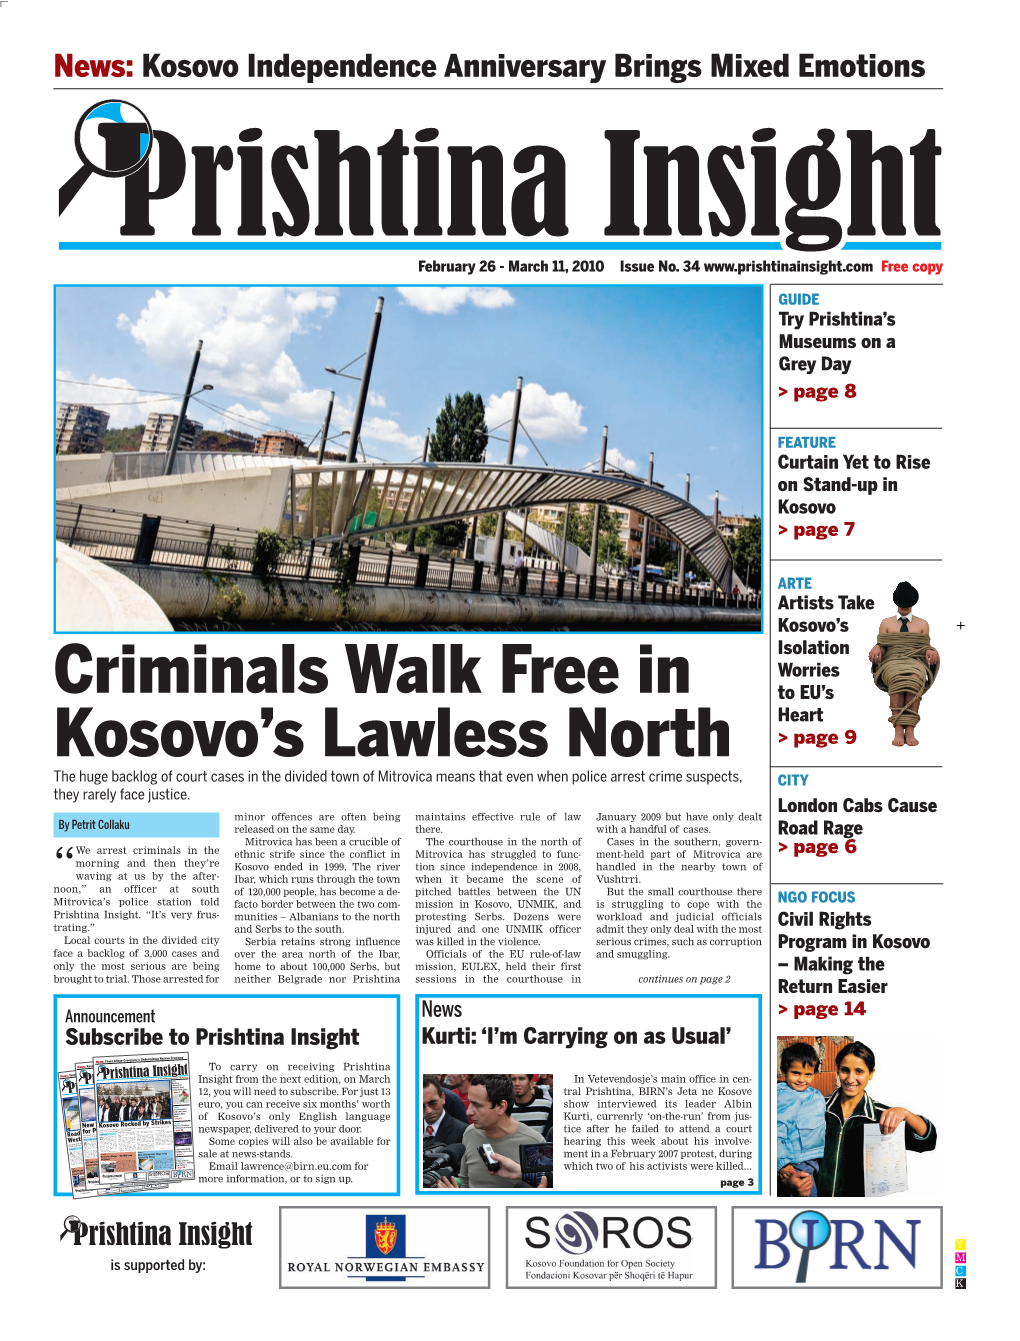 Criminals Walk Free in Kosovo's Lawless North